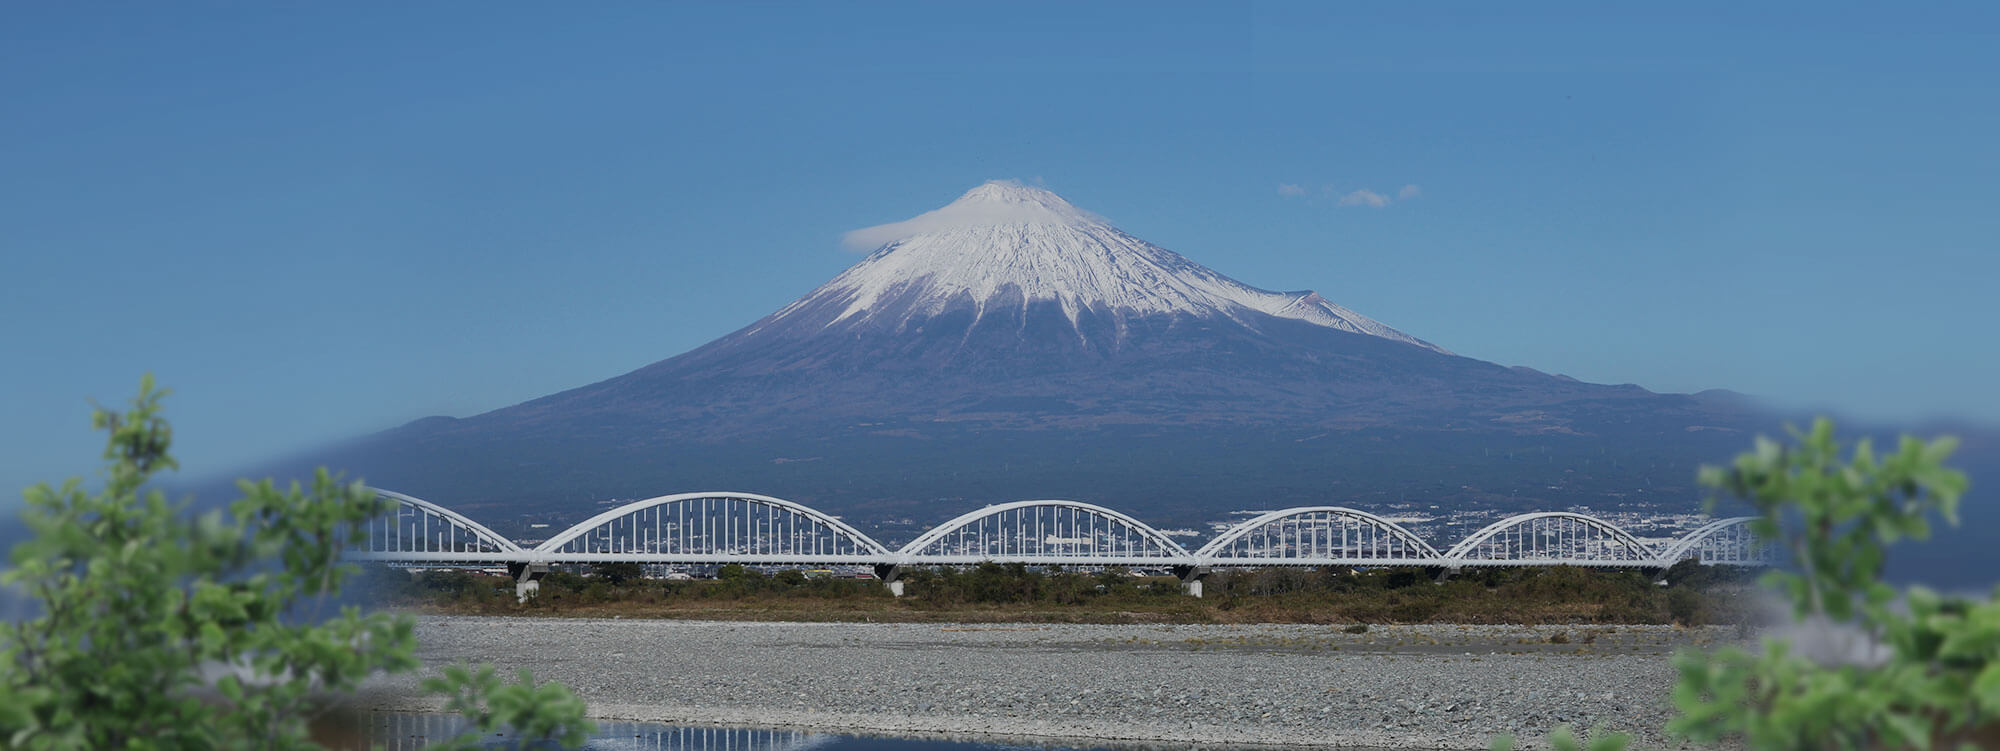 Tourism御殿場・富士山観光